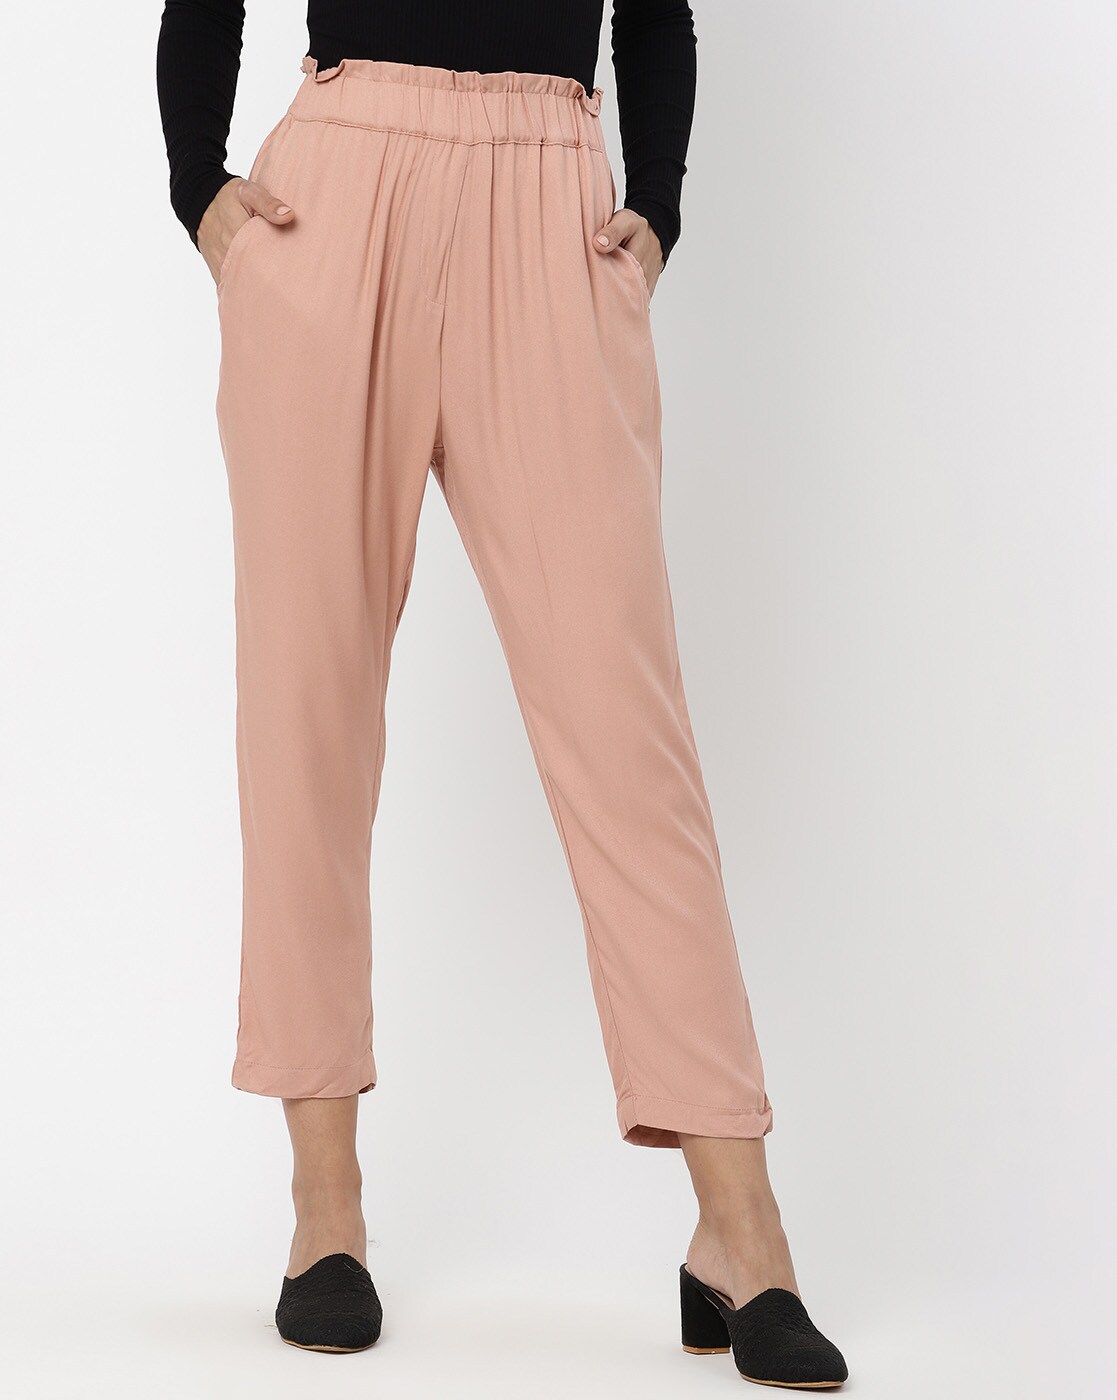 Buy Black Trousers & Pants for Women by FNOCKS Online | Ajio.com